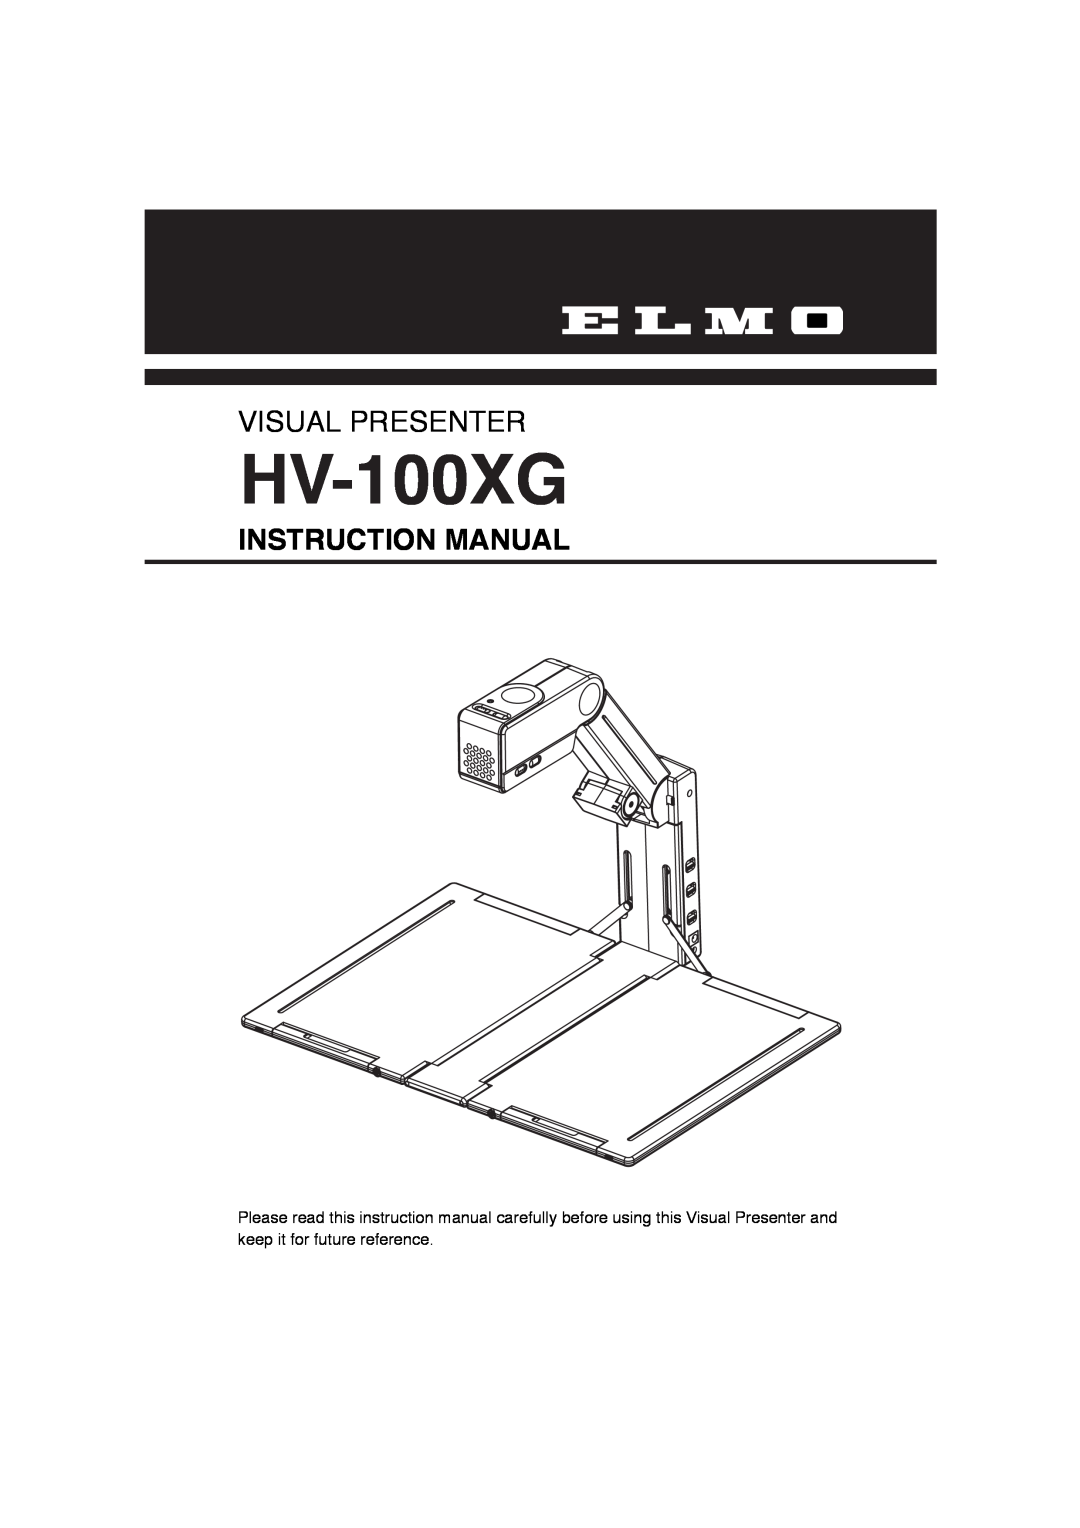 Elmo HV-100XG instruction manual Instruction Manual, Visual Presenter 